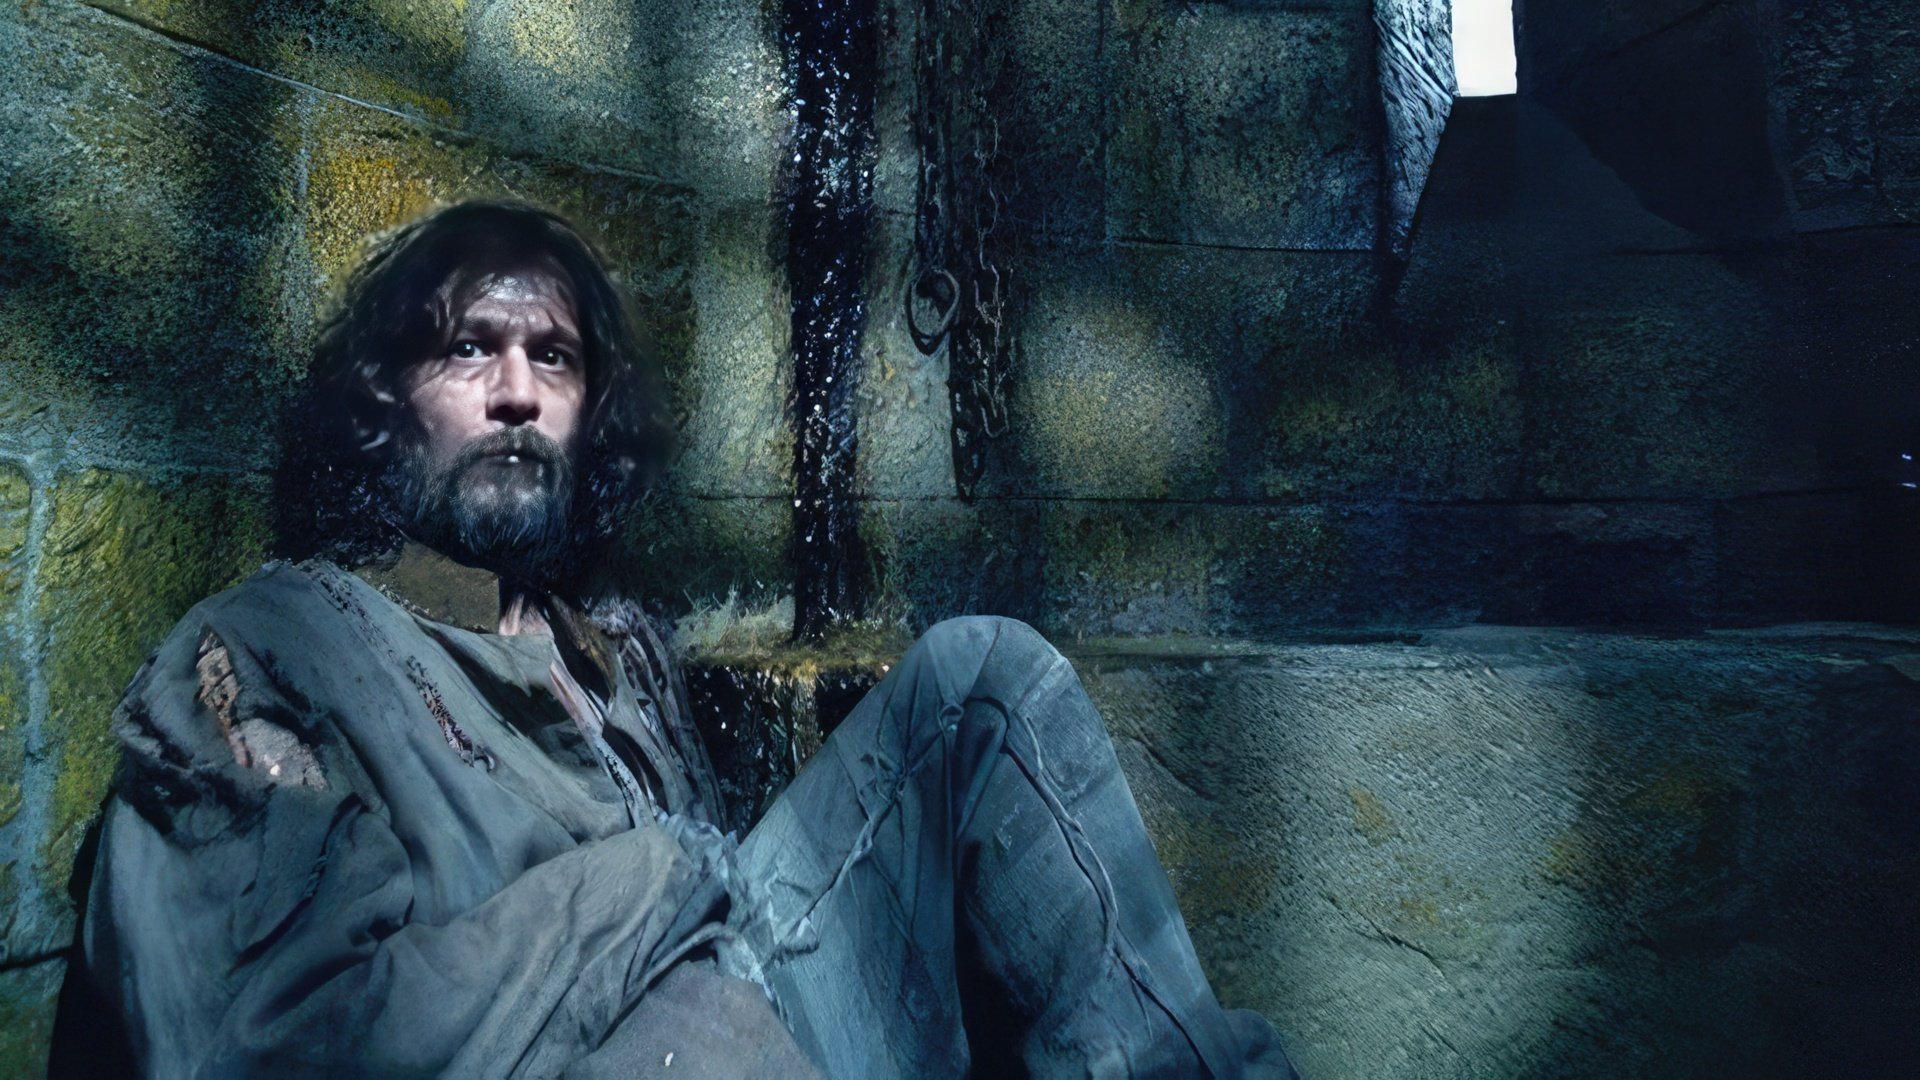 Gary Oldman as Sirius Black (Harry Potter and the Prisoner of Azkaban)